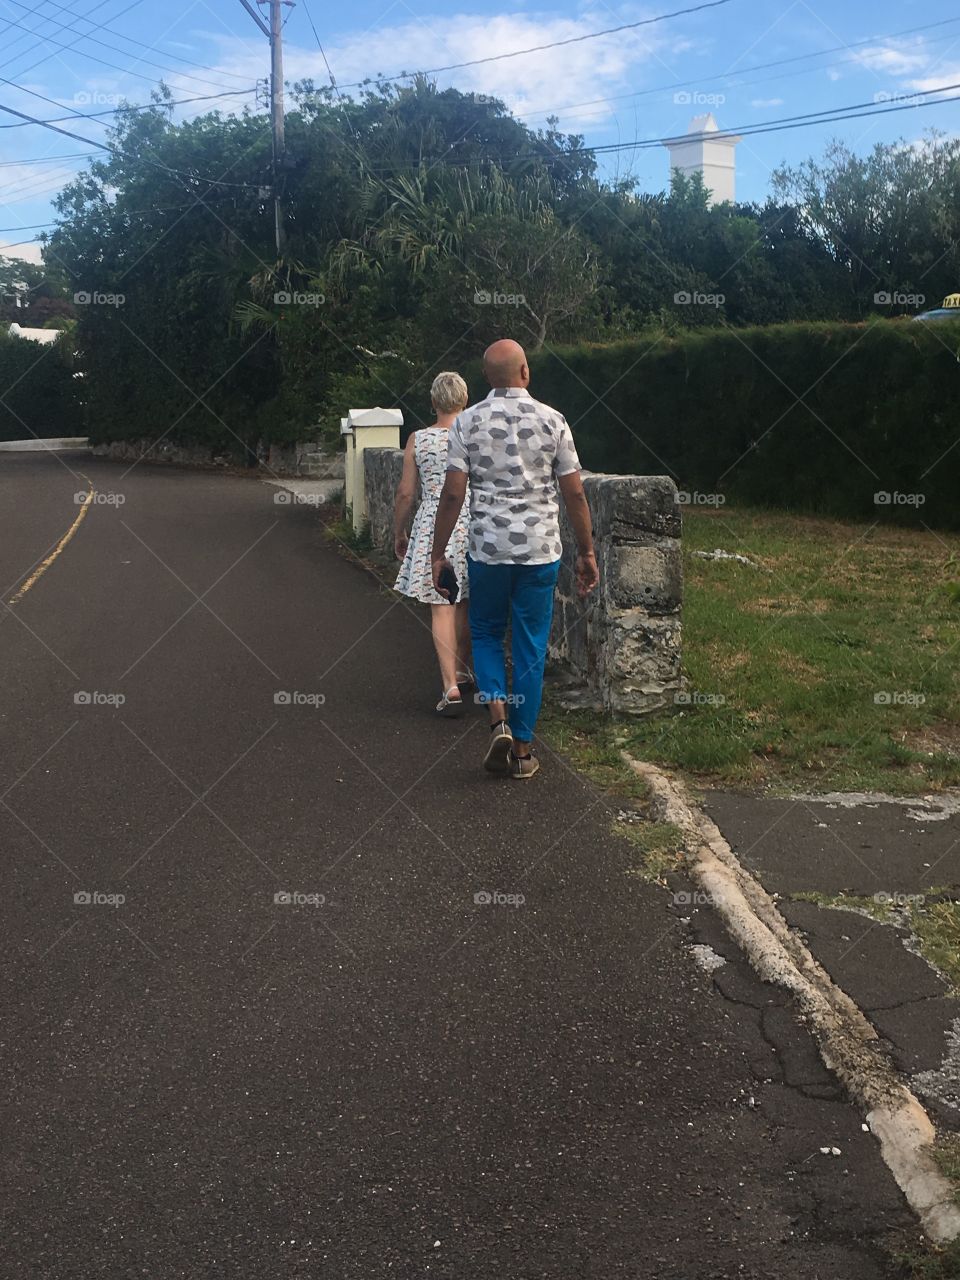 Walking Single File on the Skinny, Winding Roads in Bermuda  